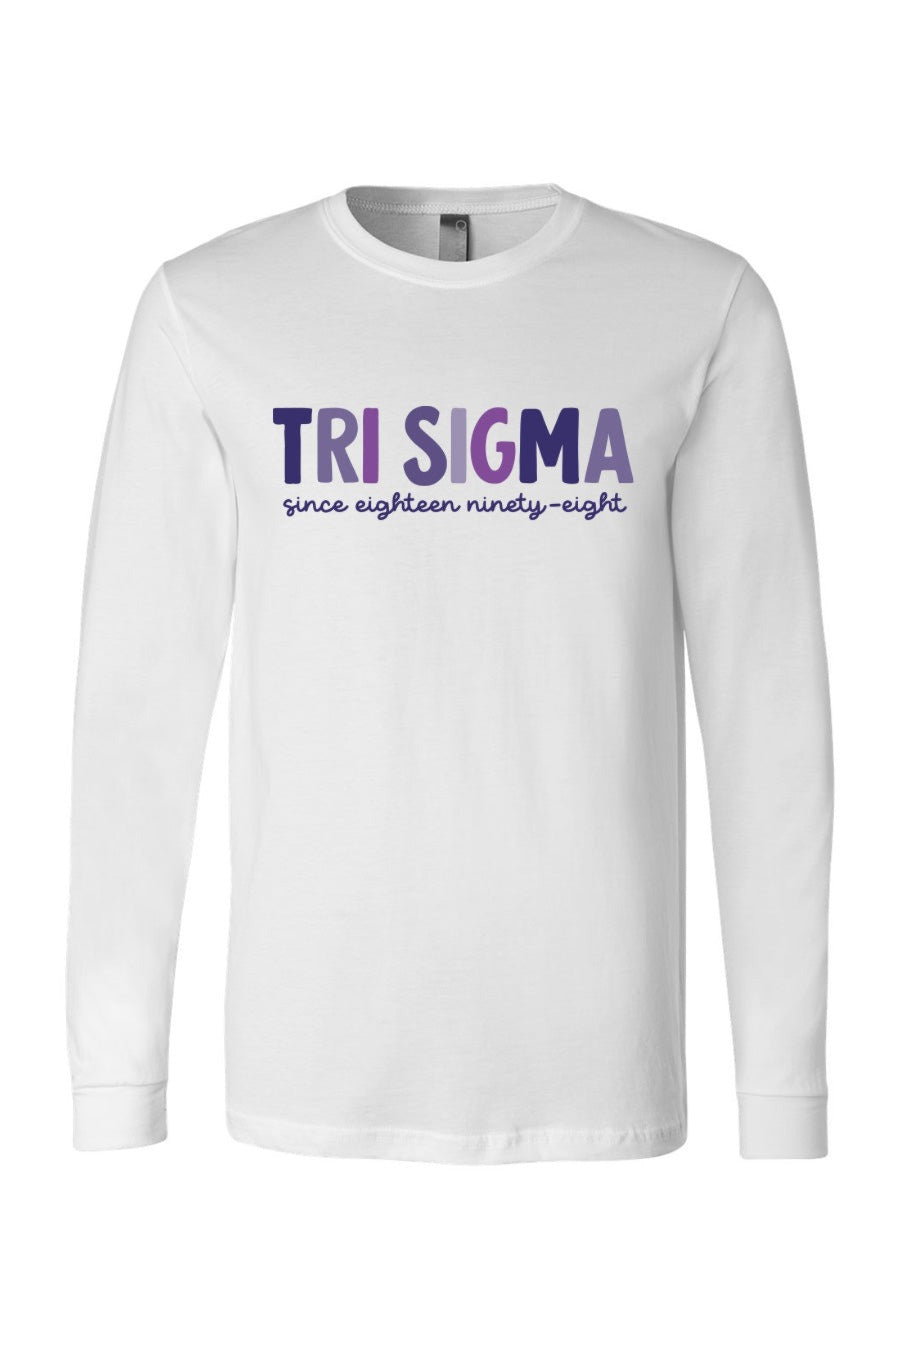 Tri Sigma Since Long Sleeve